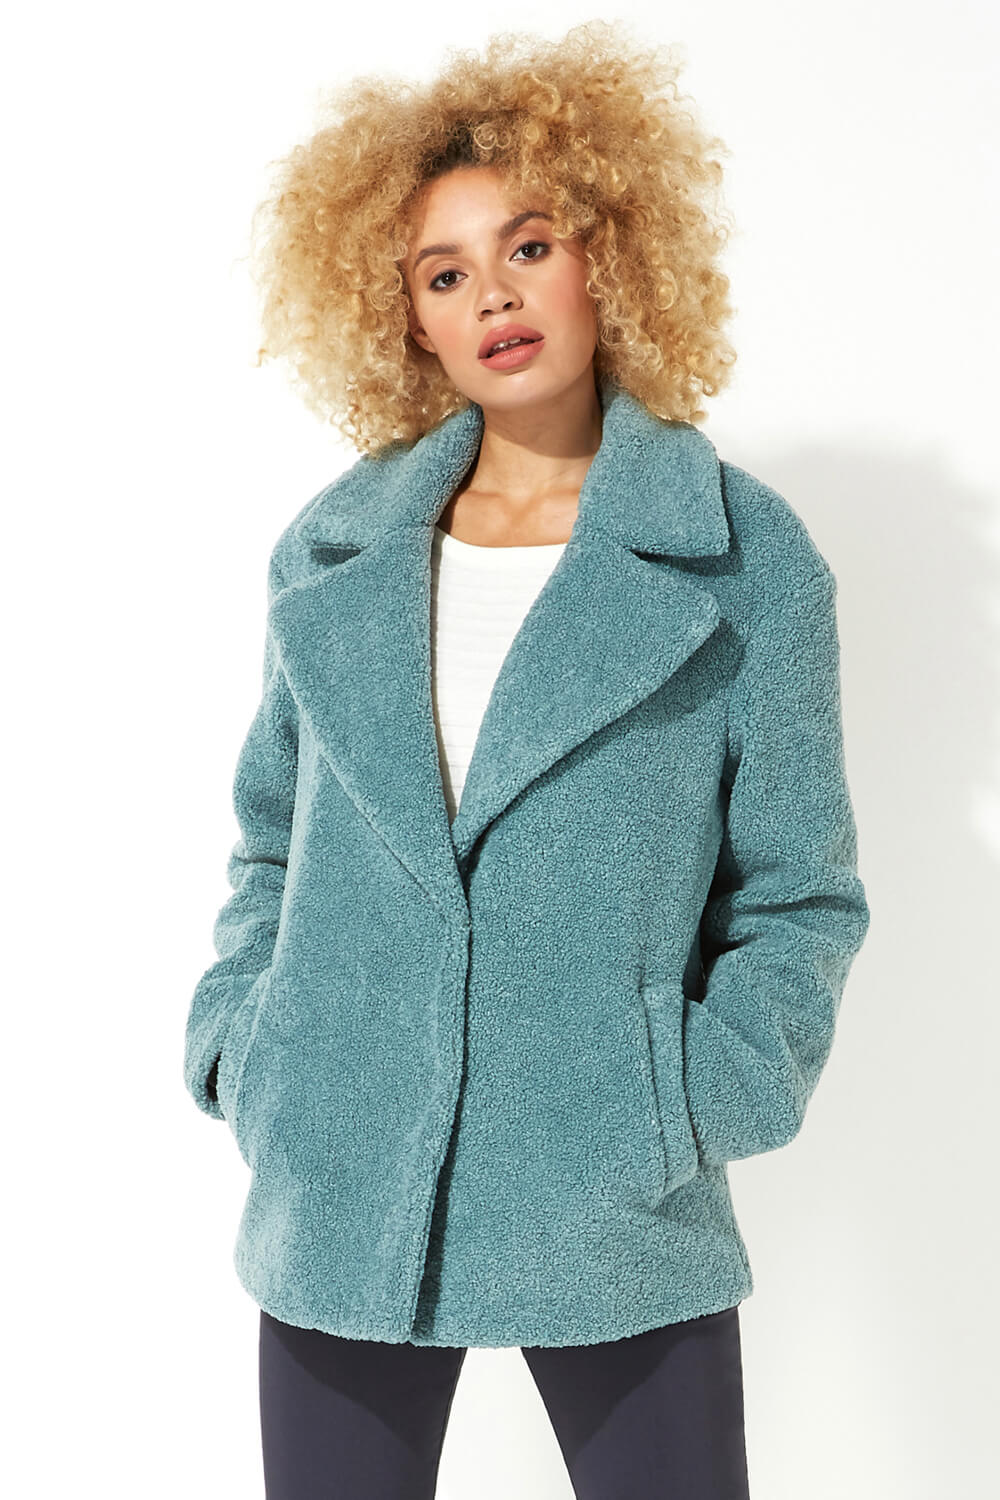 Short Soft Faux Fur Teddy Coat in Sage - Roman Originals UK